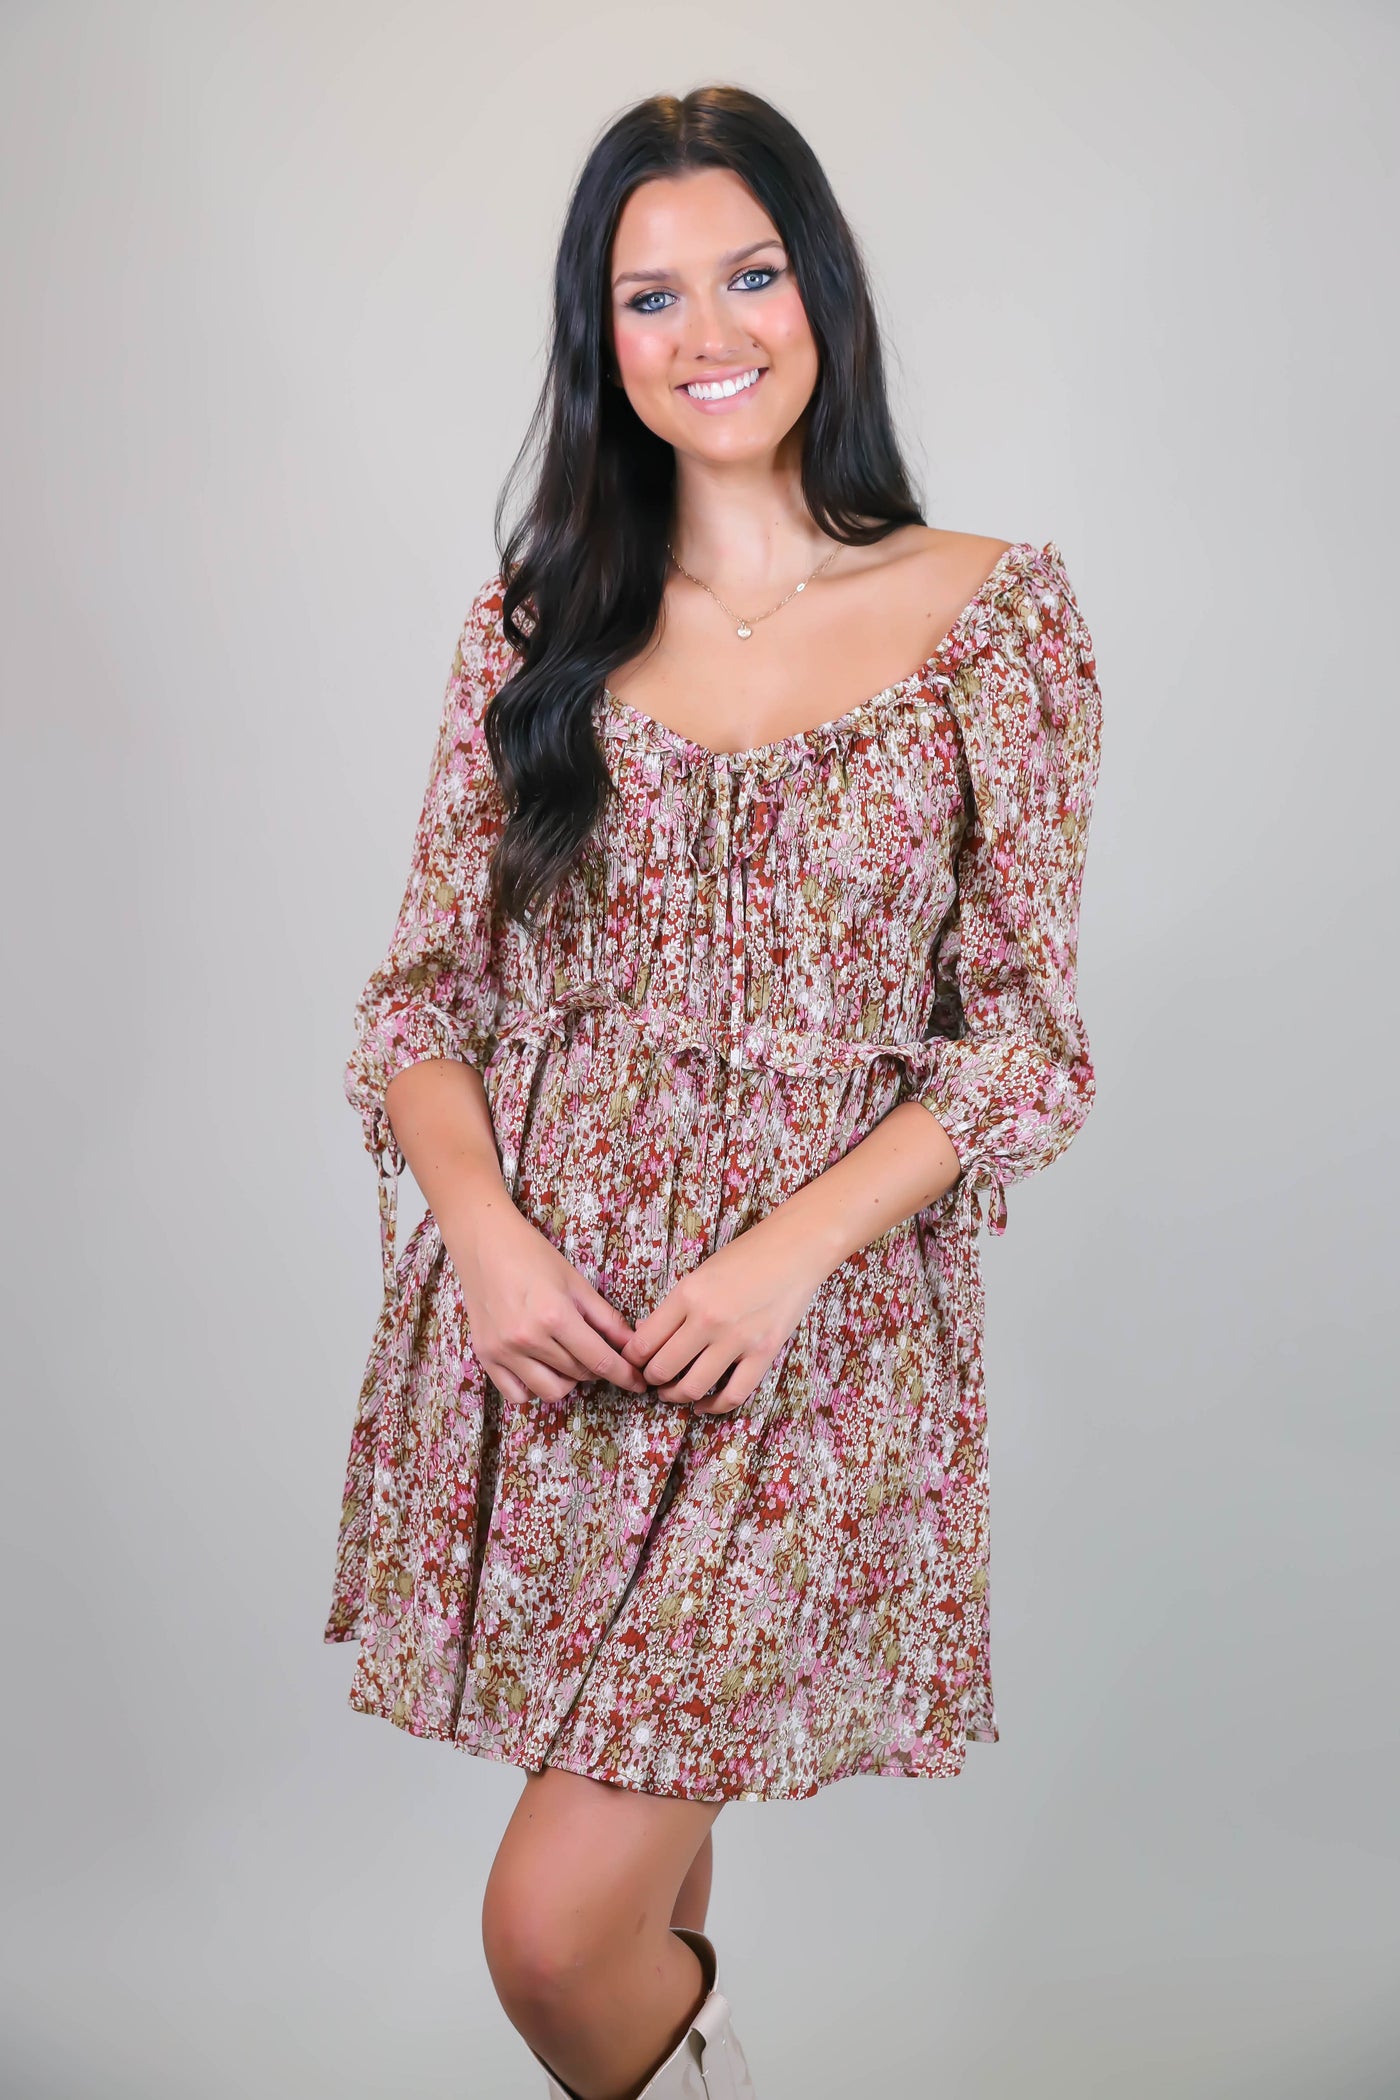 Dainty Floral Print Dress- Women's Ruffle Dress- Sweetheart Neckline Dress